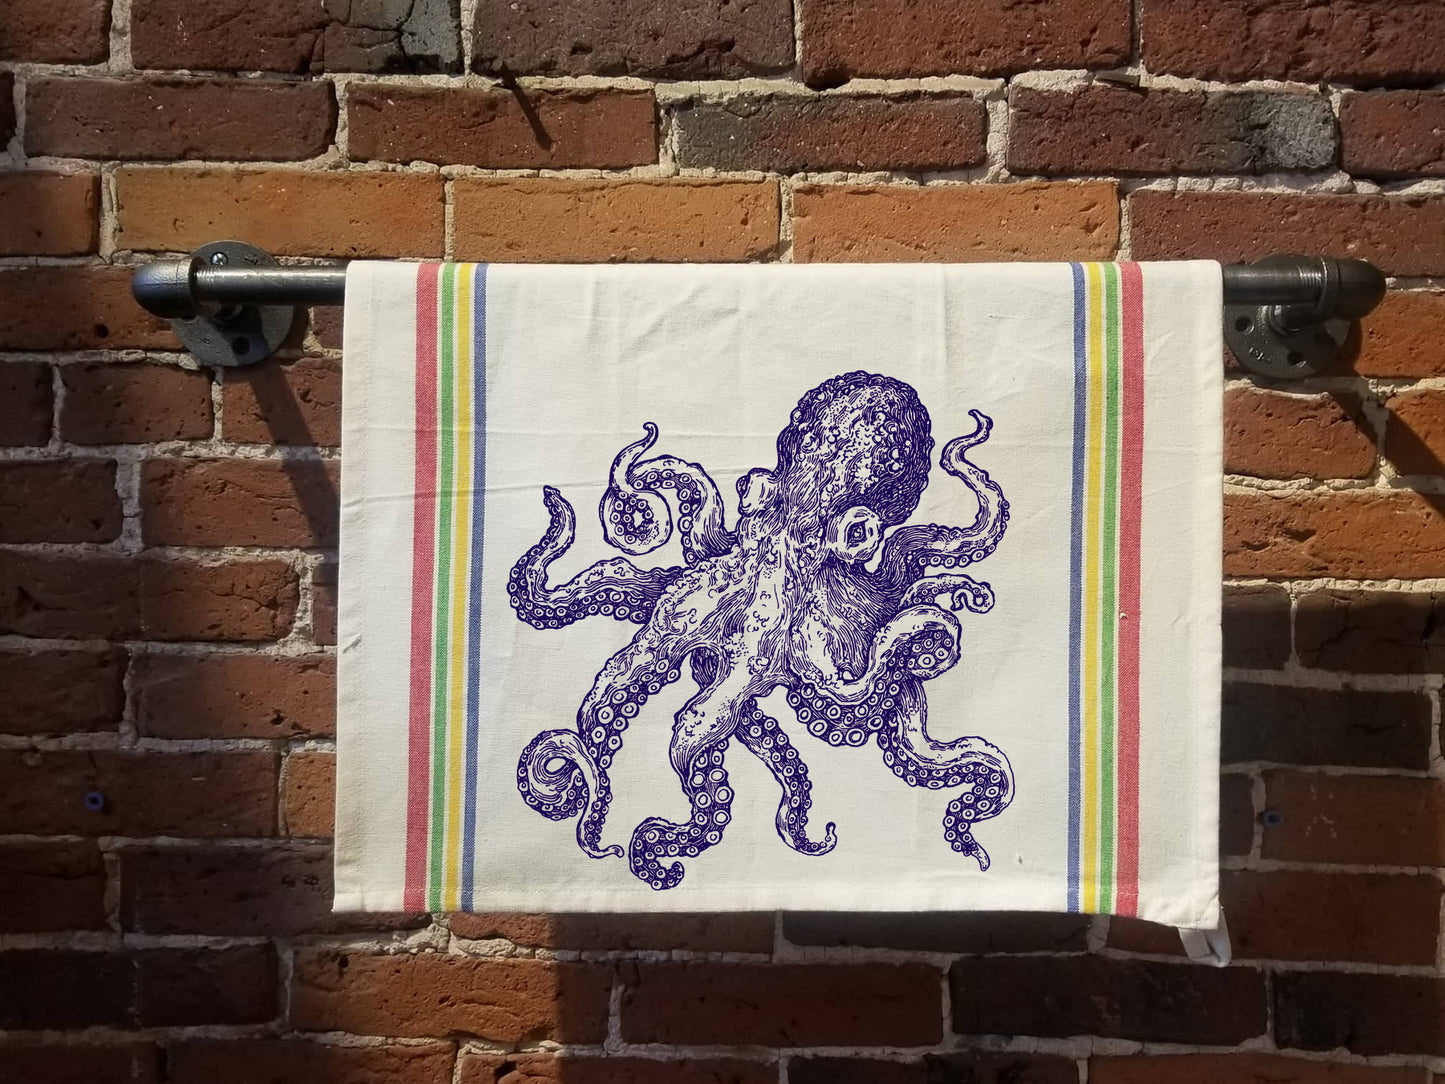 Octopus Kitchen Towel